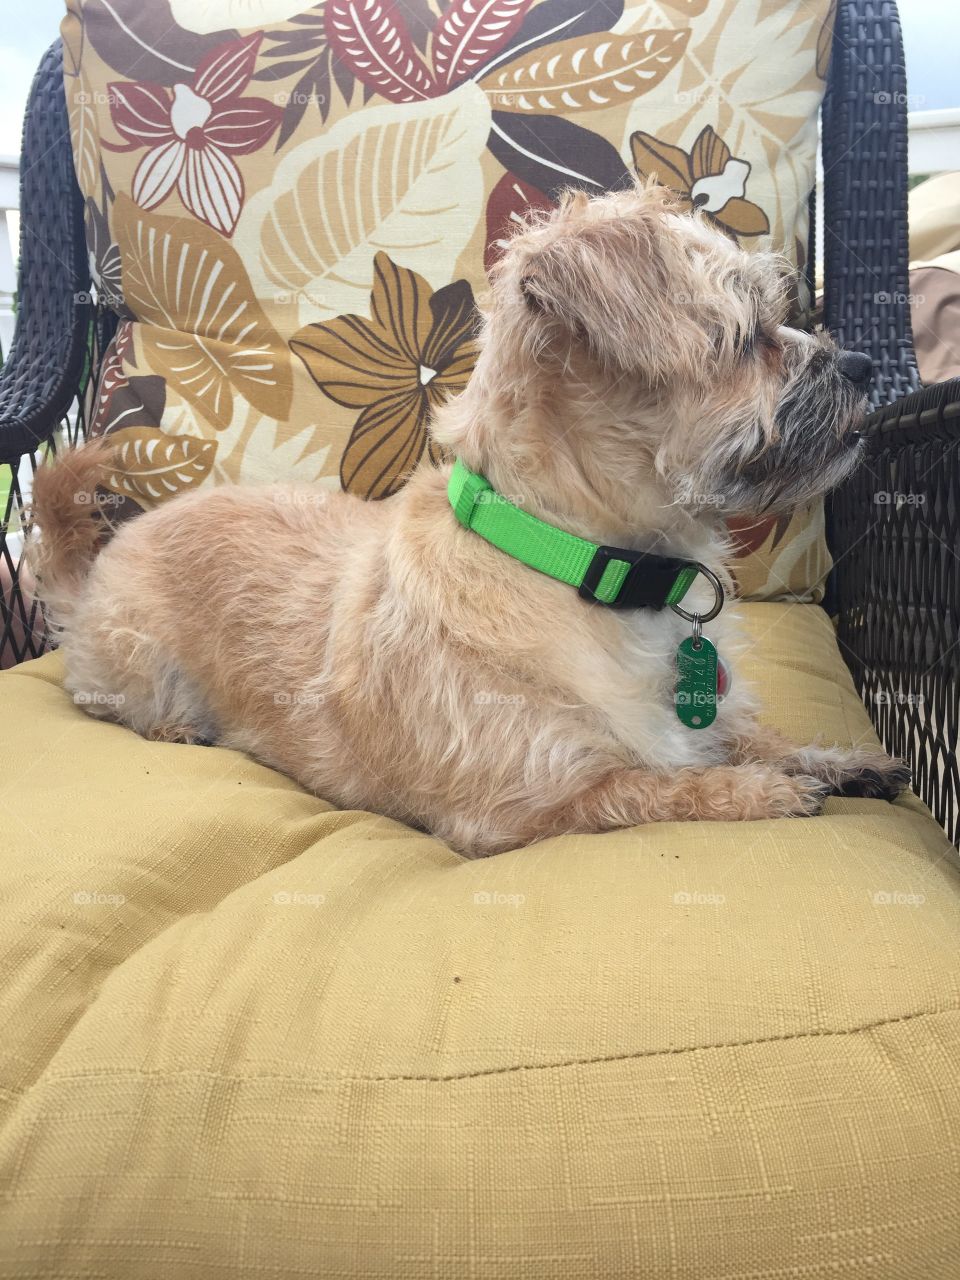 Doggo enjoying the outdoor furniture 